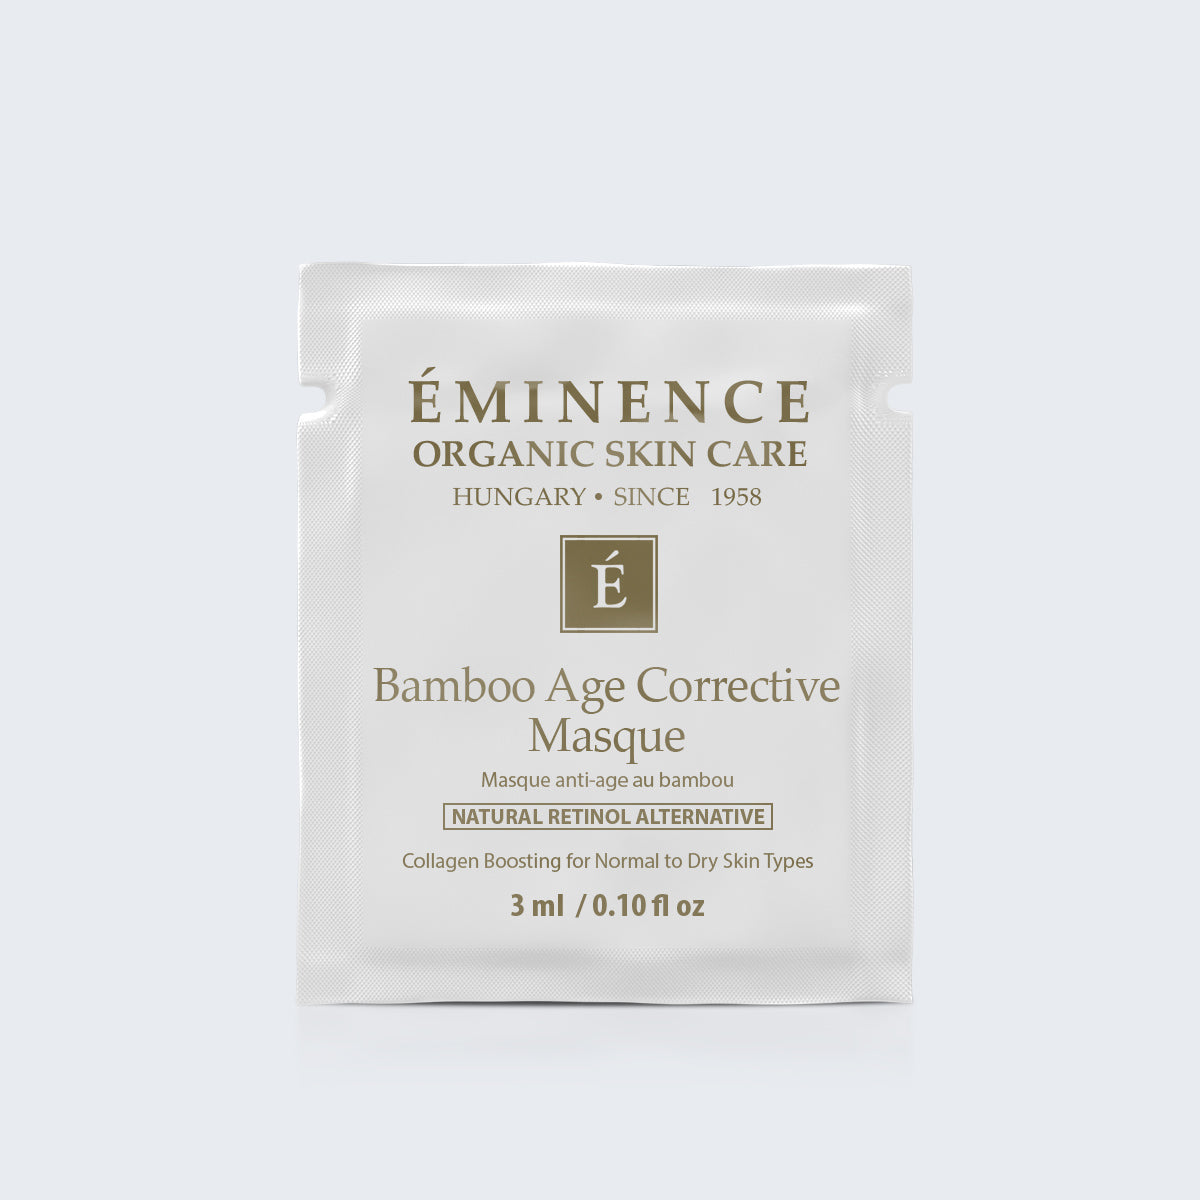 Eminence Organics Bamboo Age Corrective Masque Card Sample